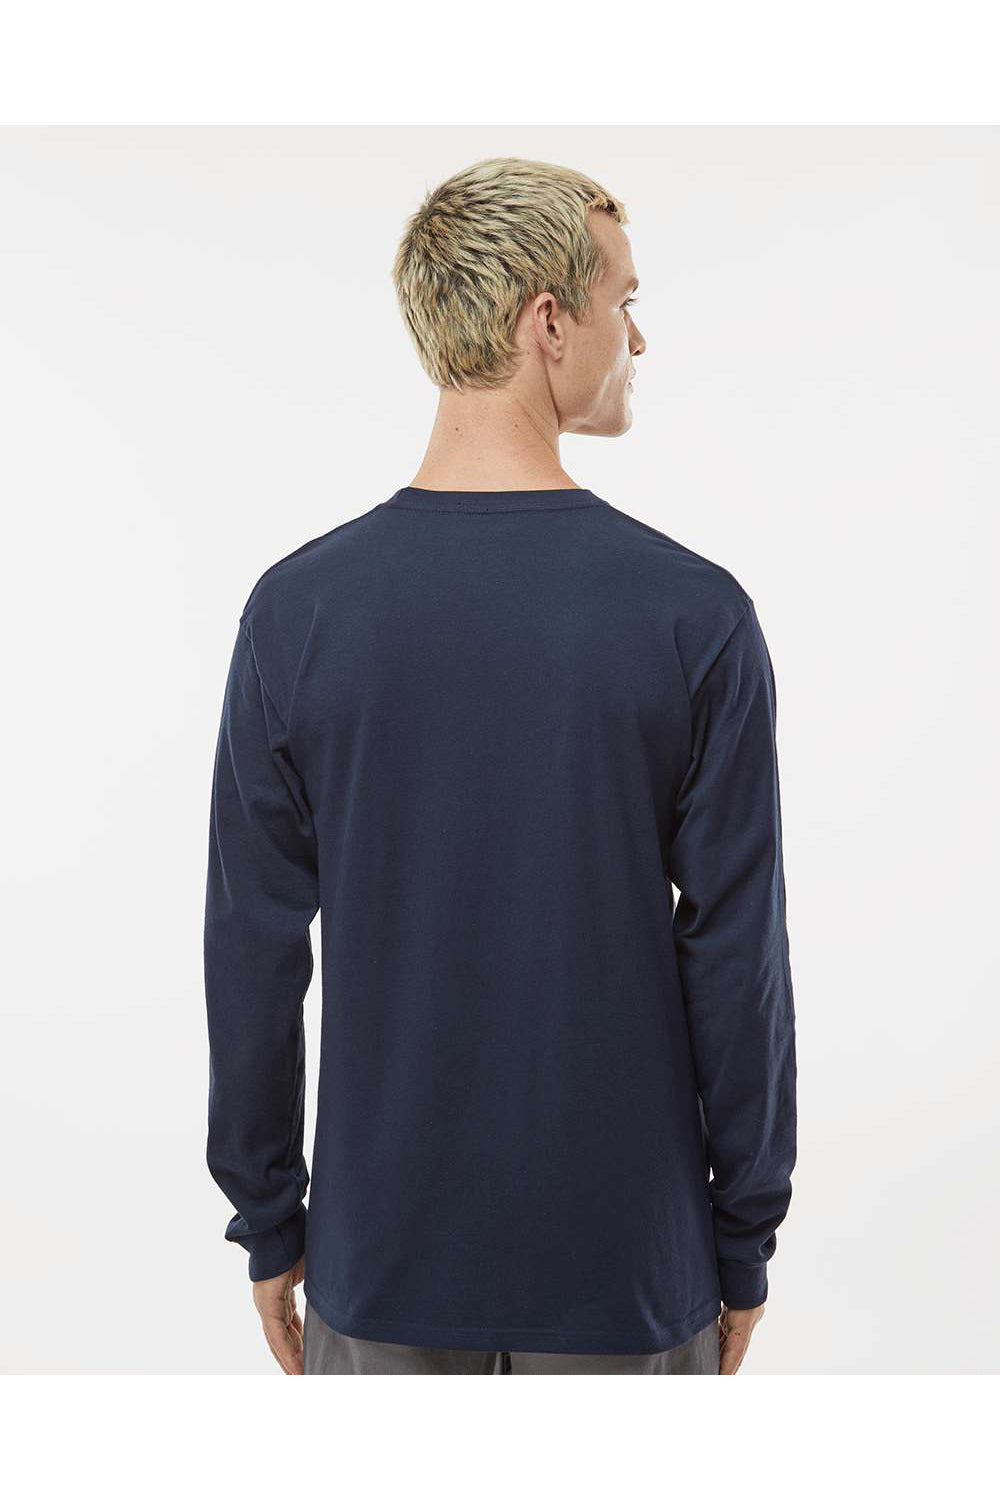 Tultex 291 Mens Jersey Long Sleeve Crewneck T-Shirt Navy Blue Model Back